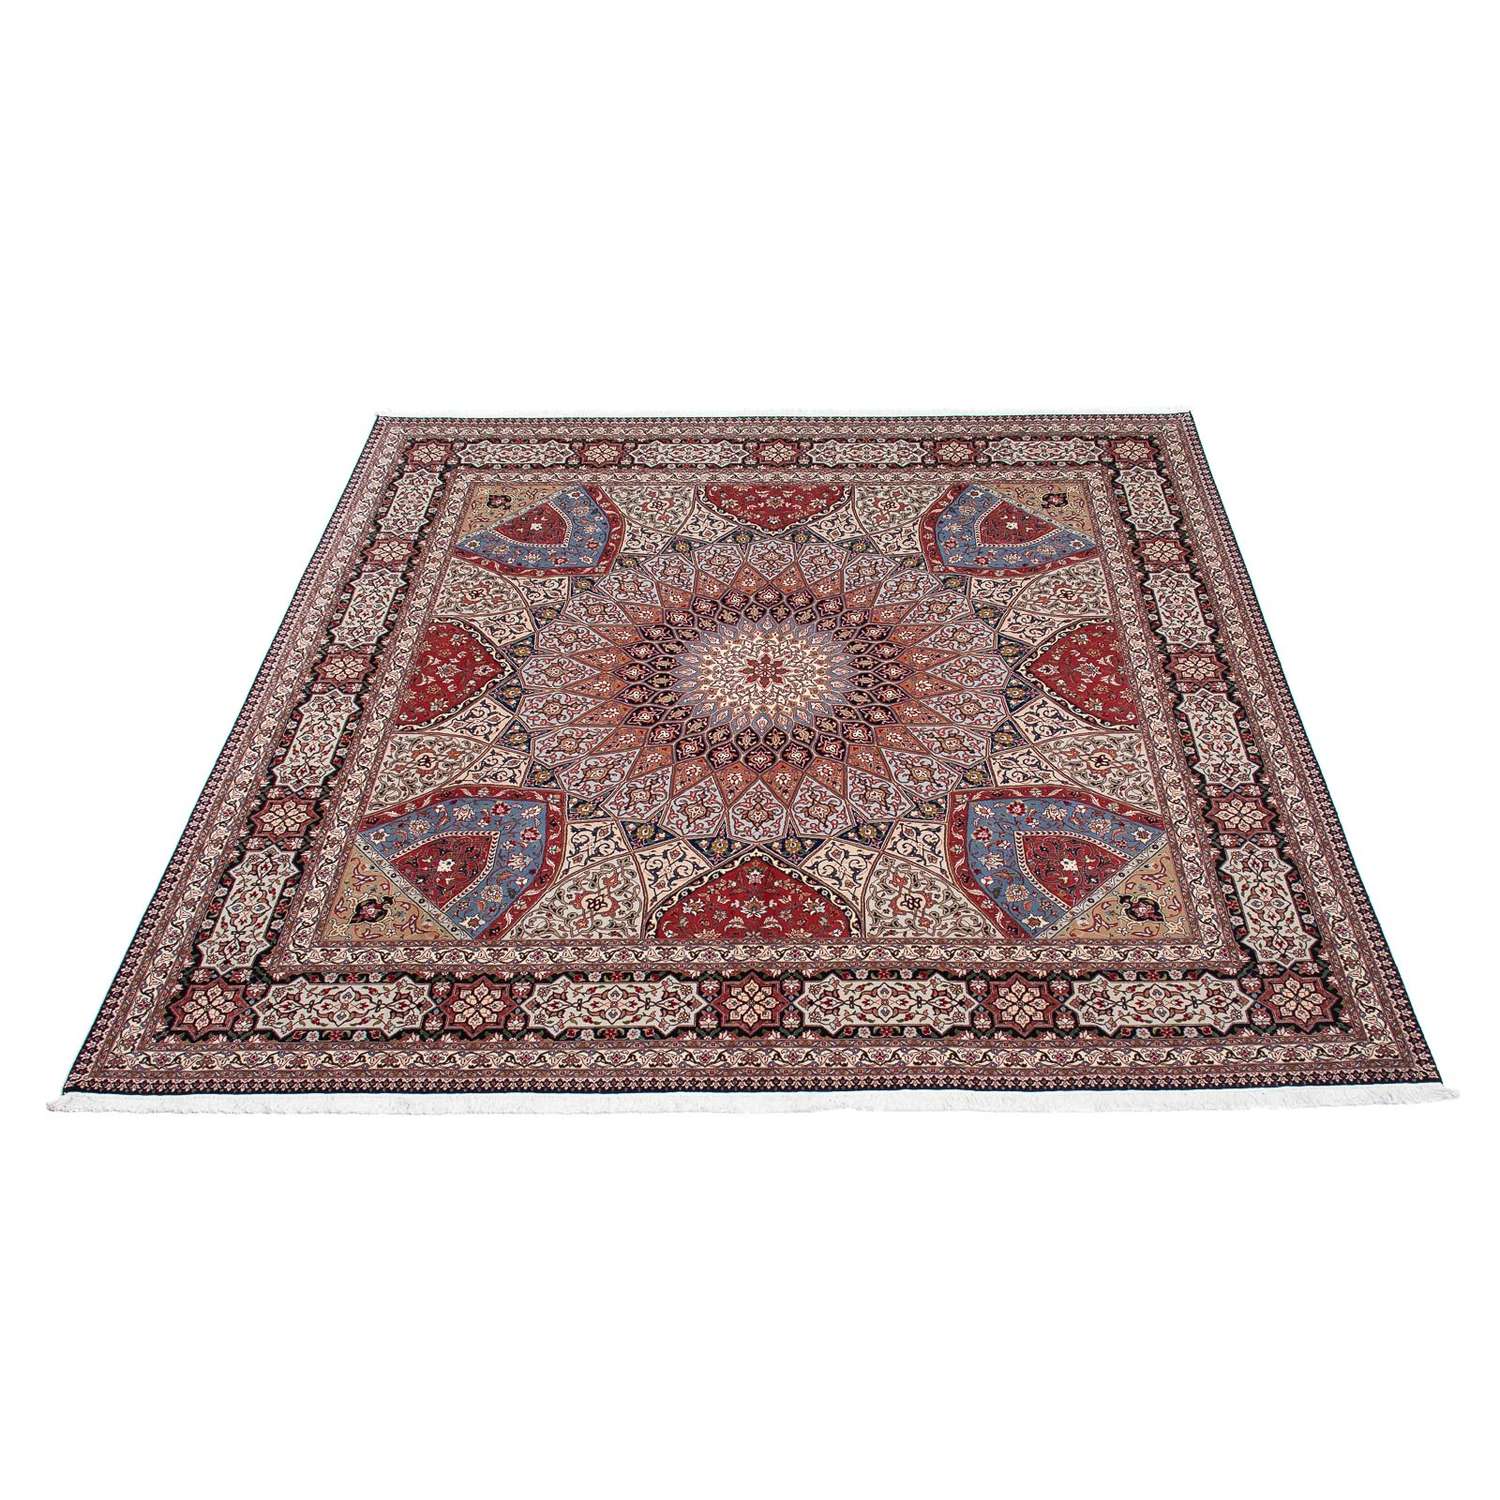 Persisk matta - Tabriz - Royal kvadrat  - 300 x 298 cm - flerfärgad